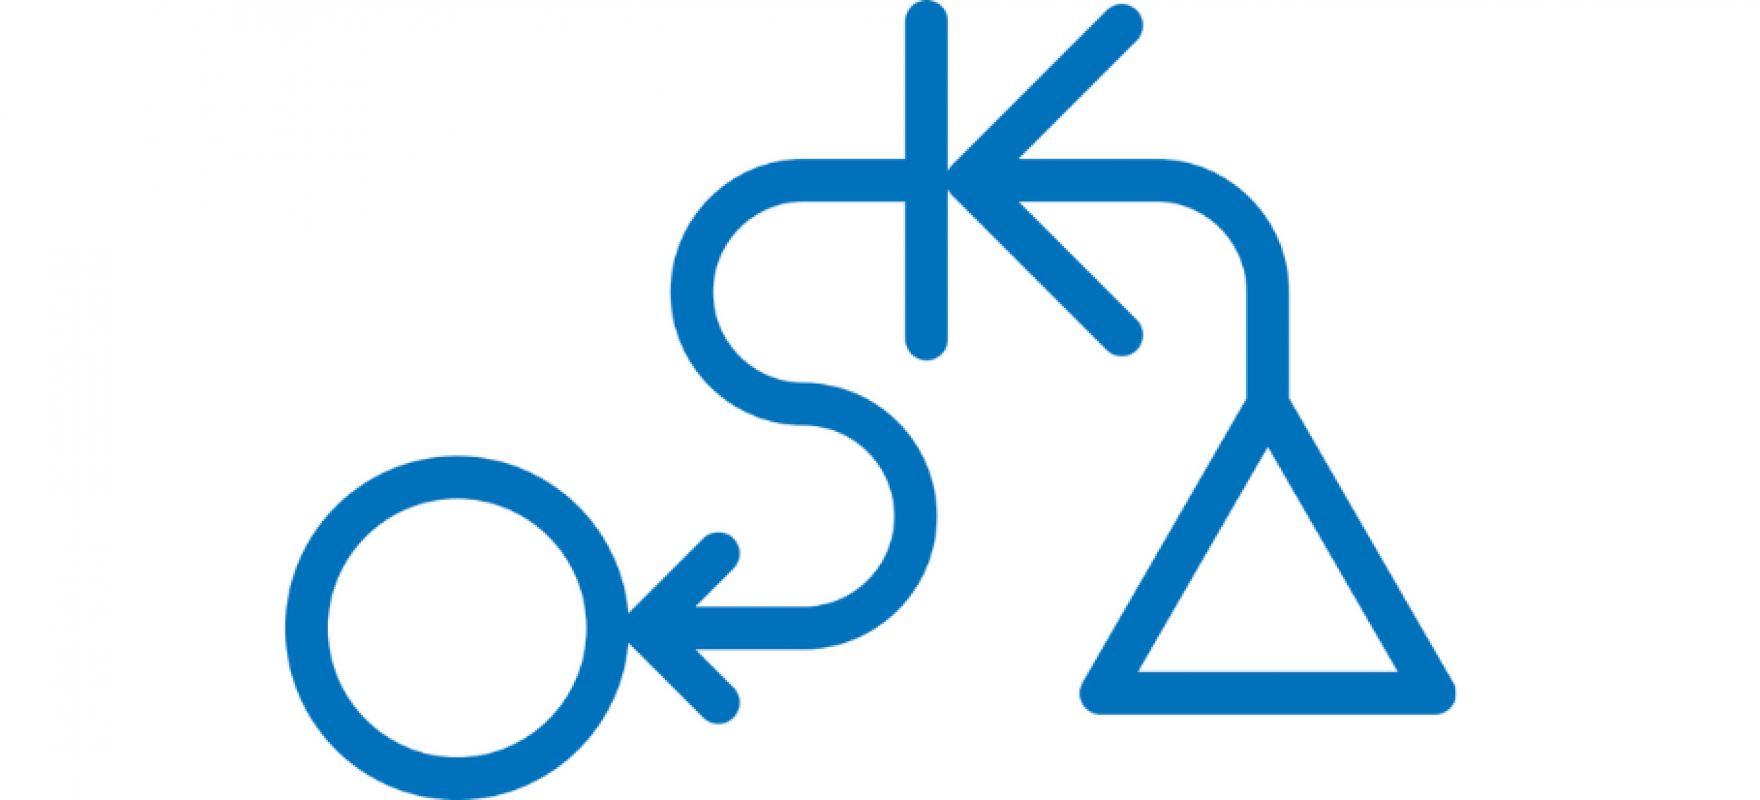 OSKA logo